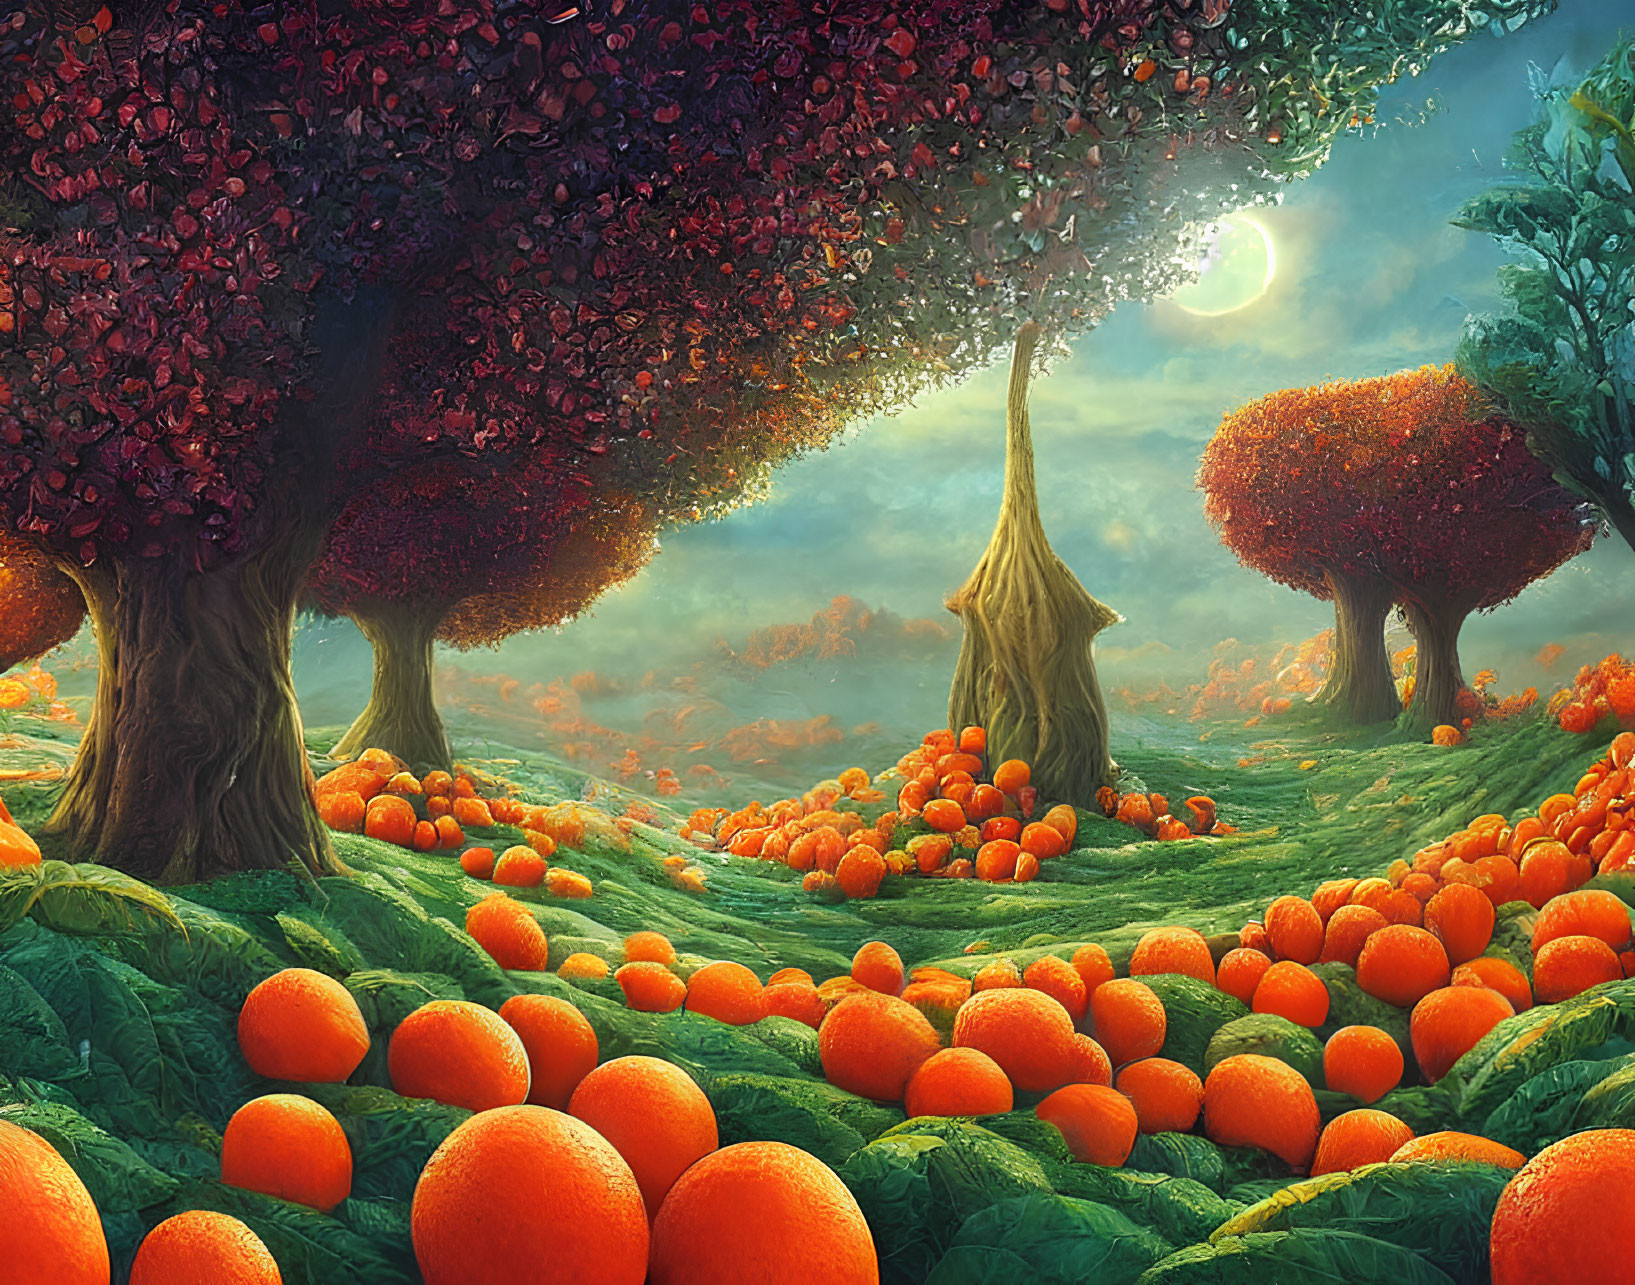 Landscape of Tangerines